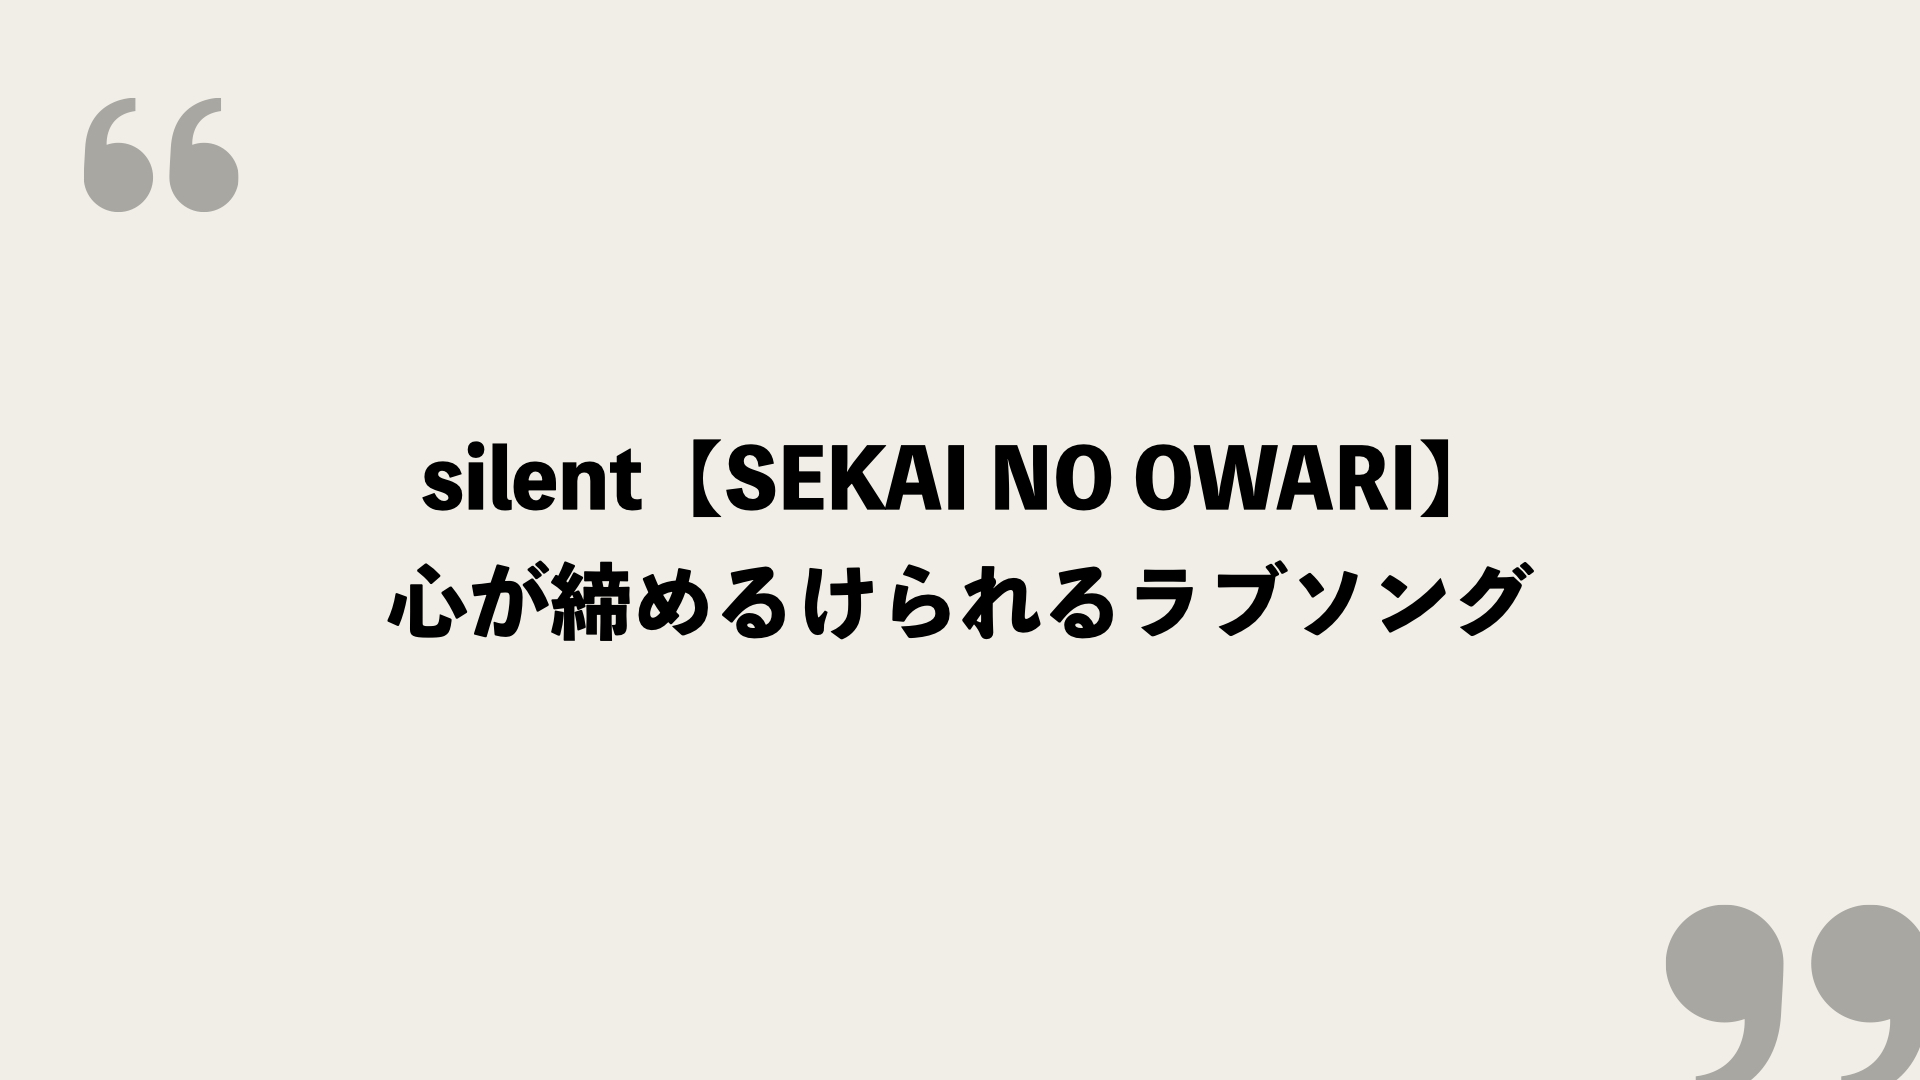 Silent Sekai No Owari 歌詞の意味を考察 心が締めるけられるラブソング Framu Media